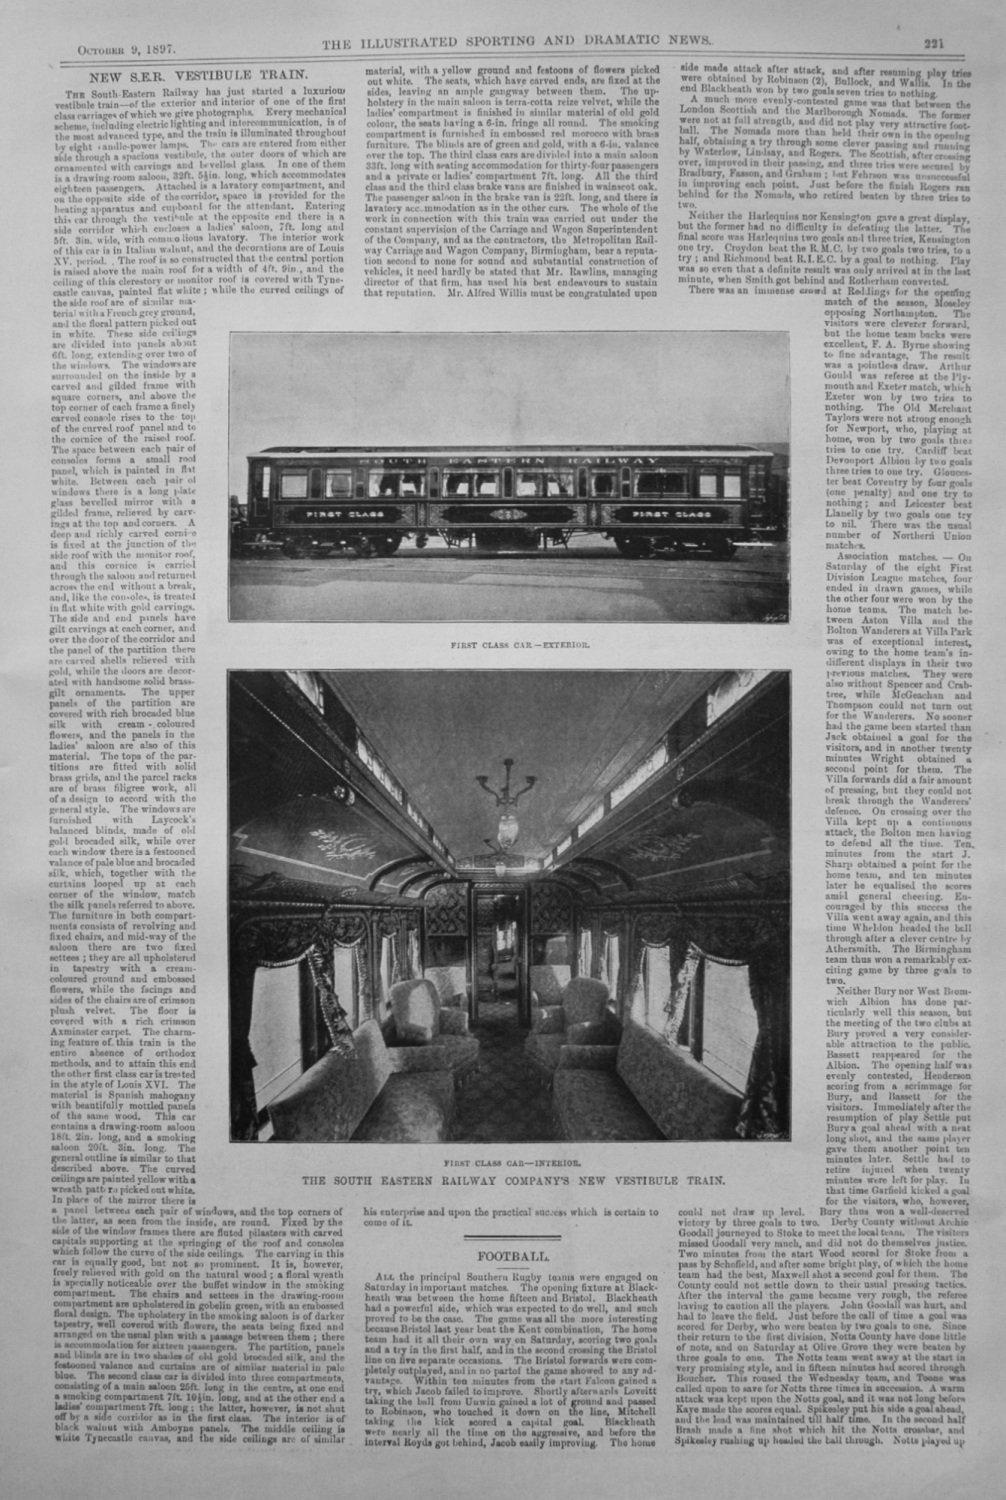 New South-Eastern Railway Vestibule Train. 1897